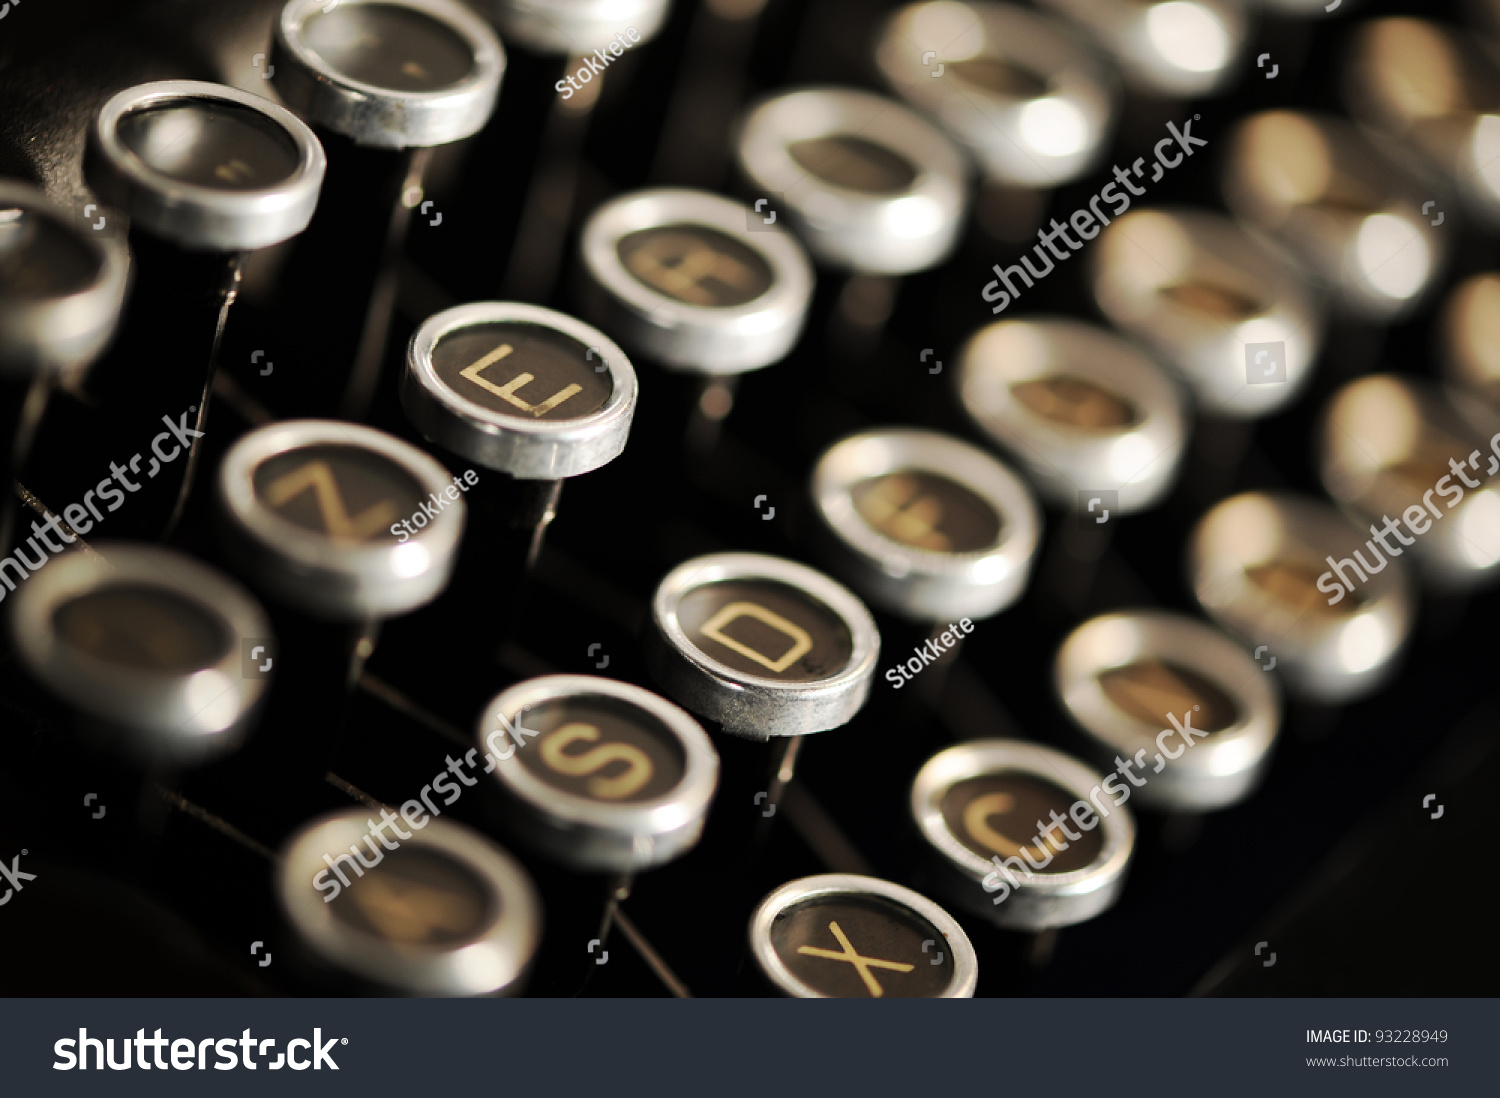 Close up photo of antique typewriter keys, shallow focus #93228949